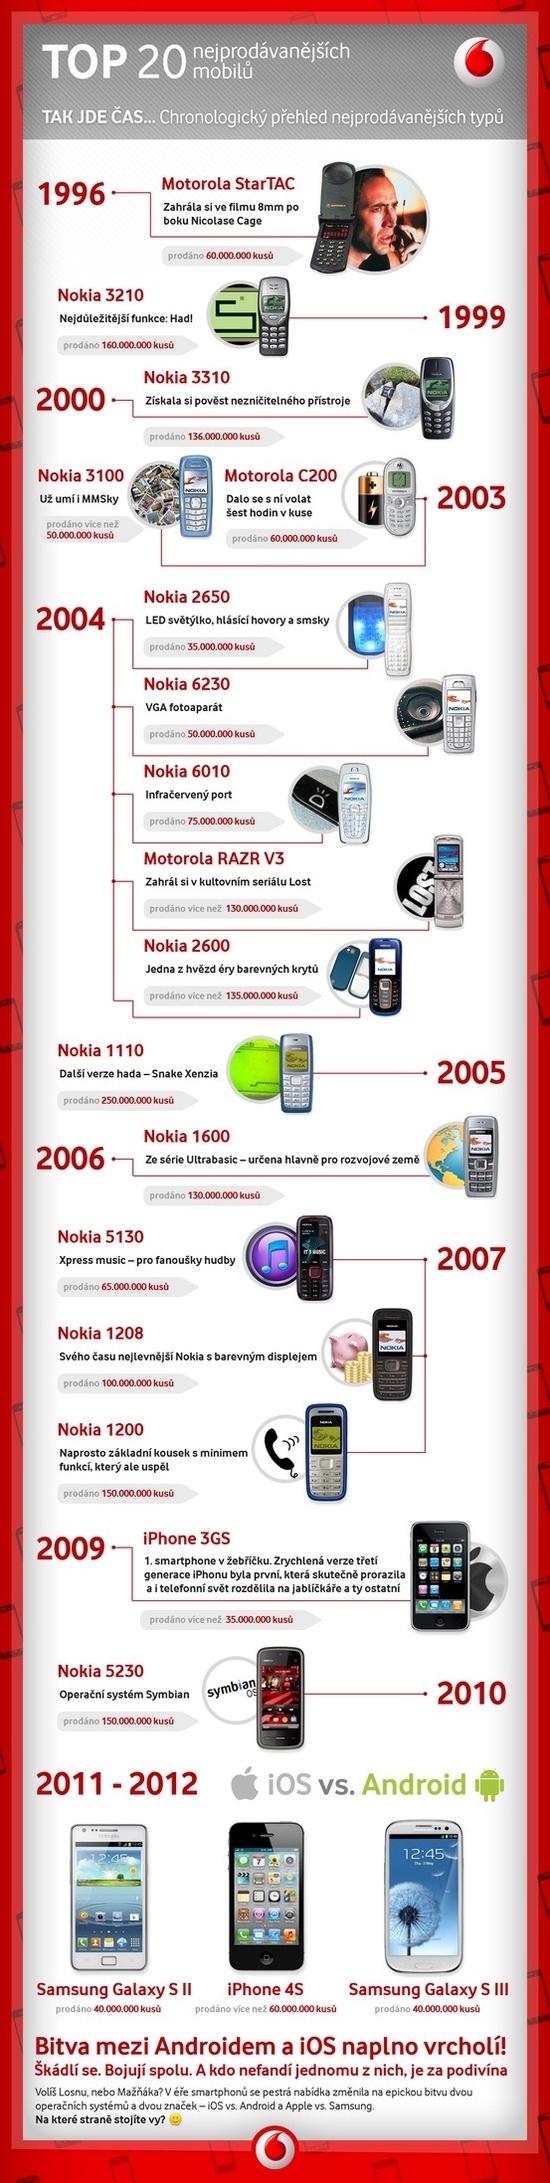 20 nejprodavanejsich mobilu